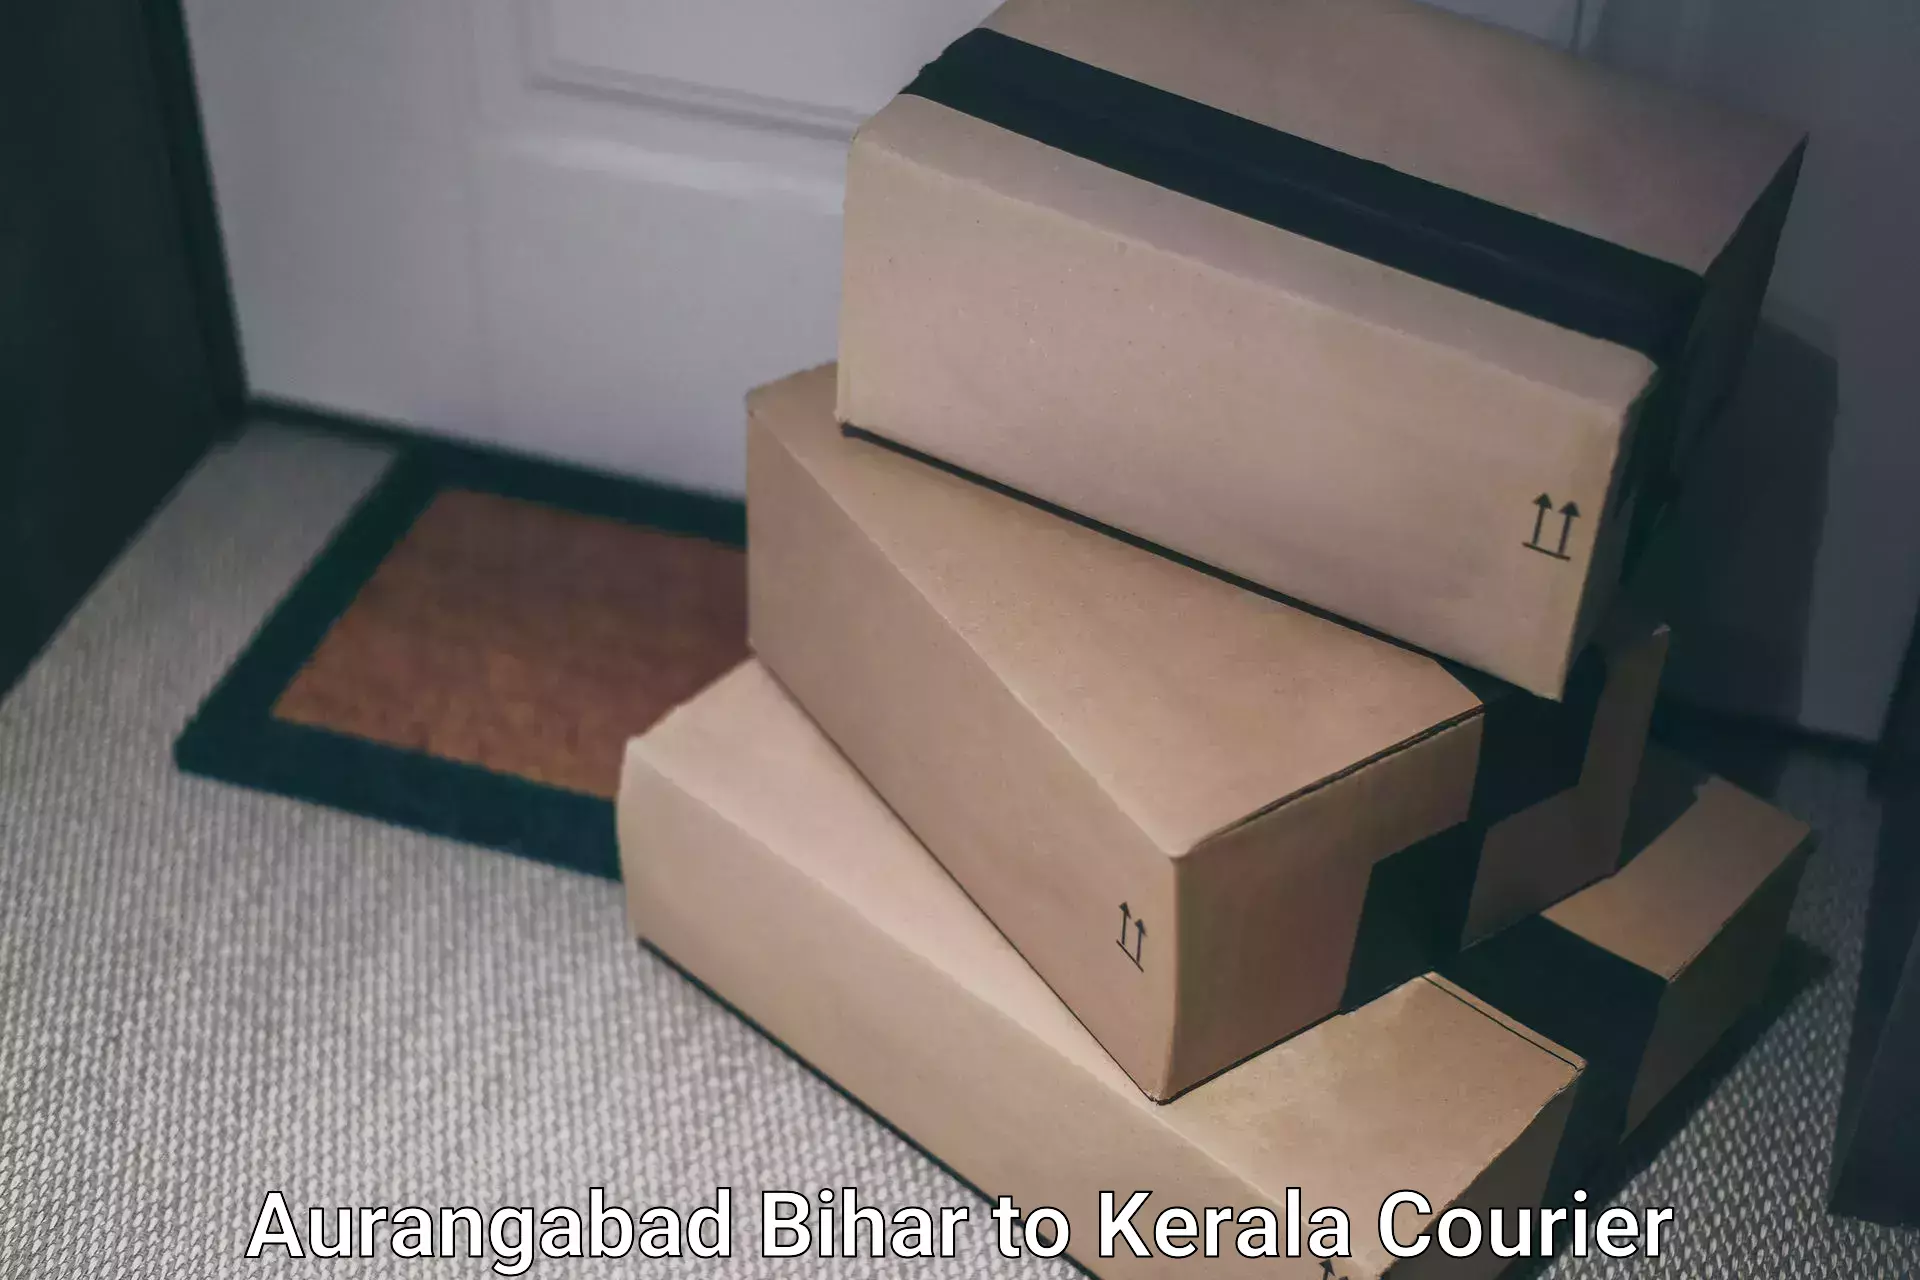 Cargo courier service Aurangabad Bihar to Trivandrum